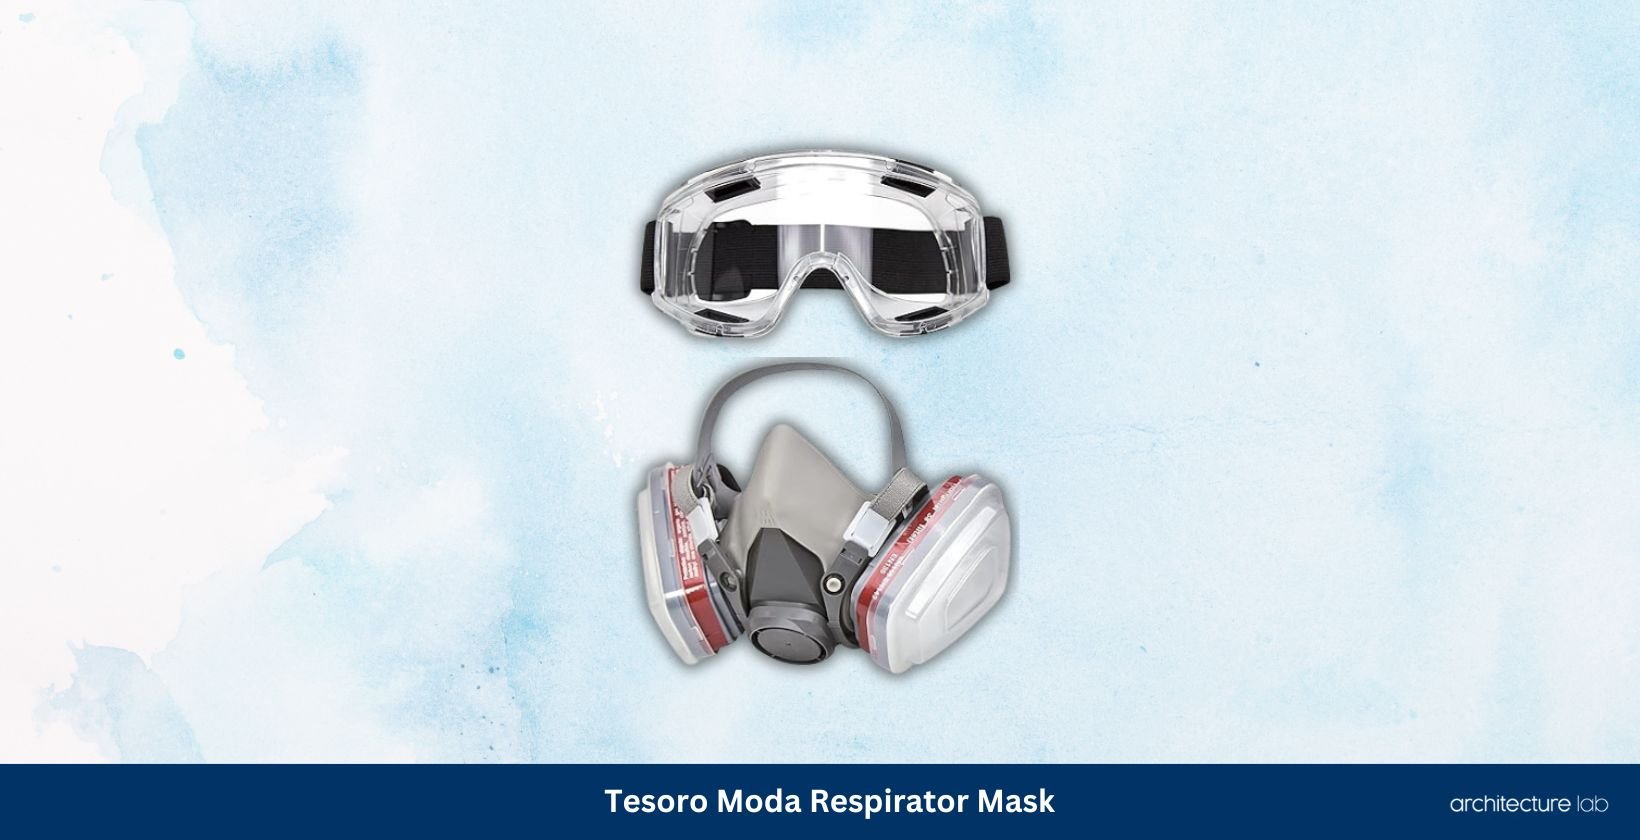 Tesoro moda respirator mask